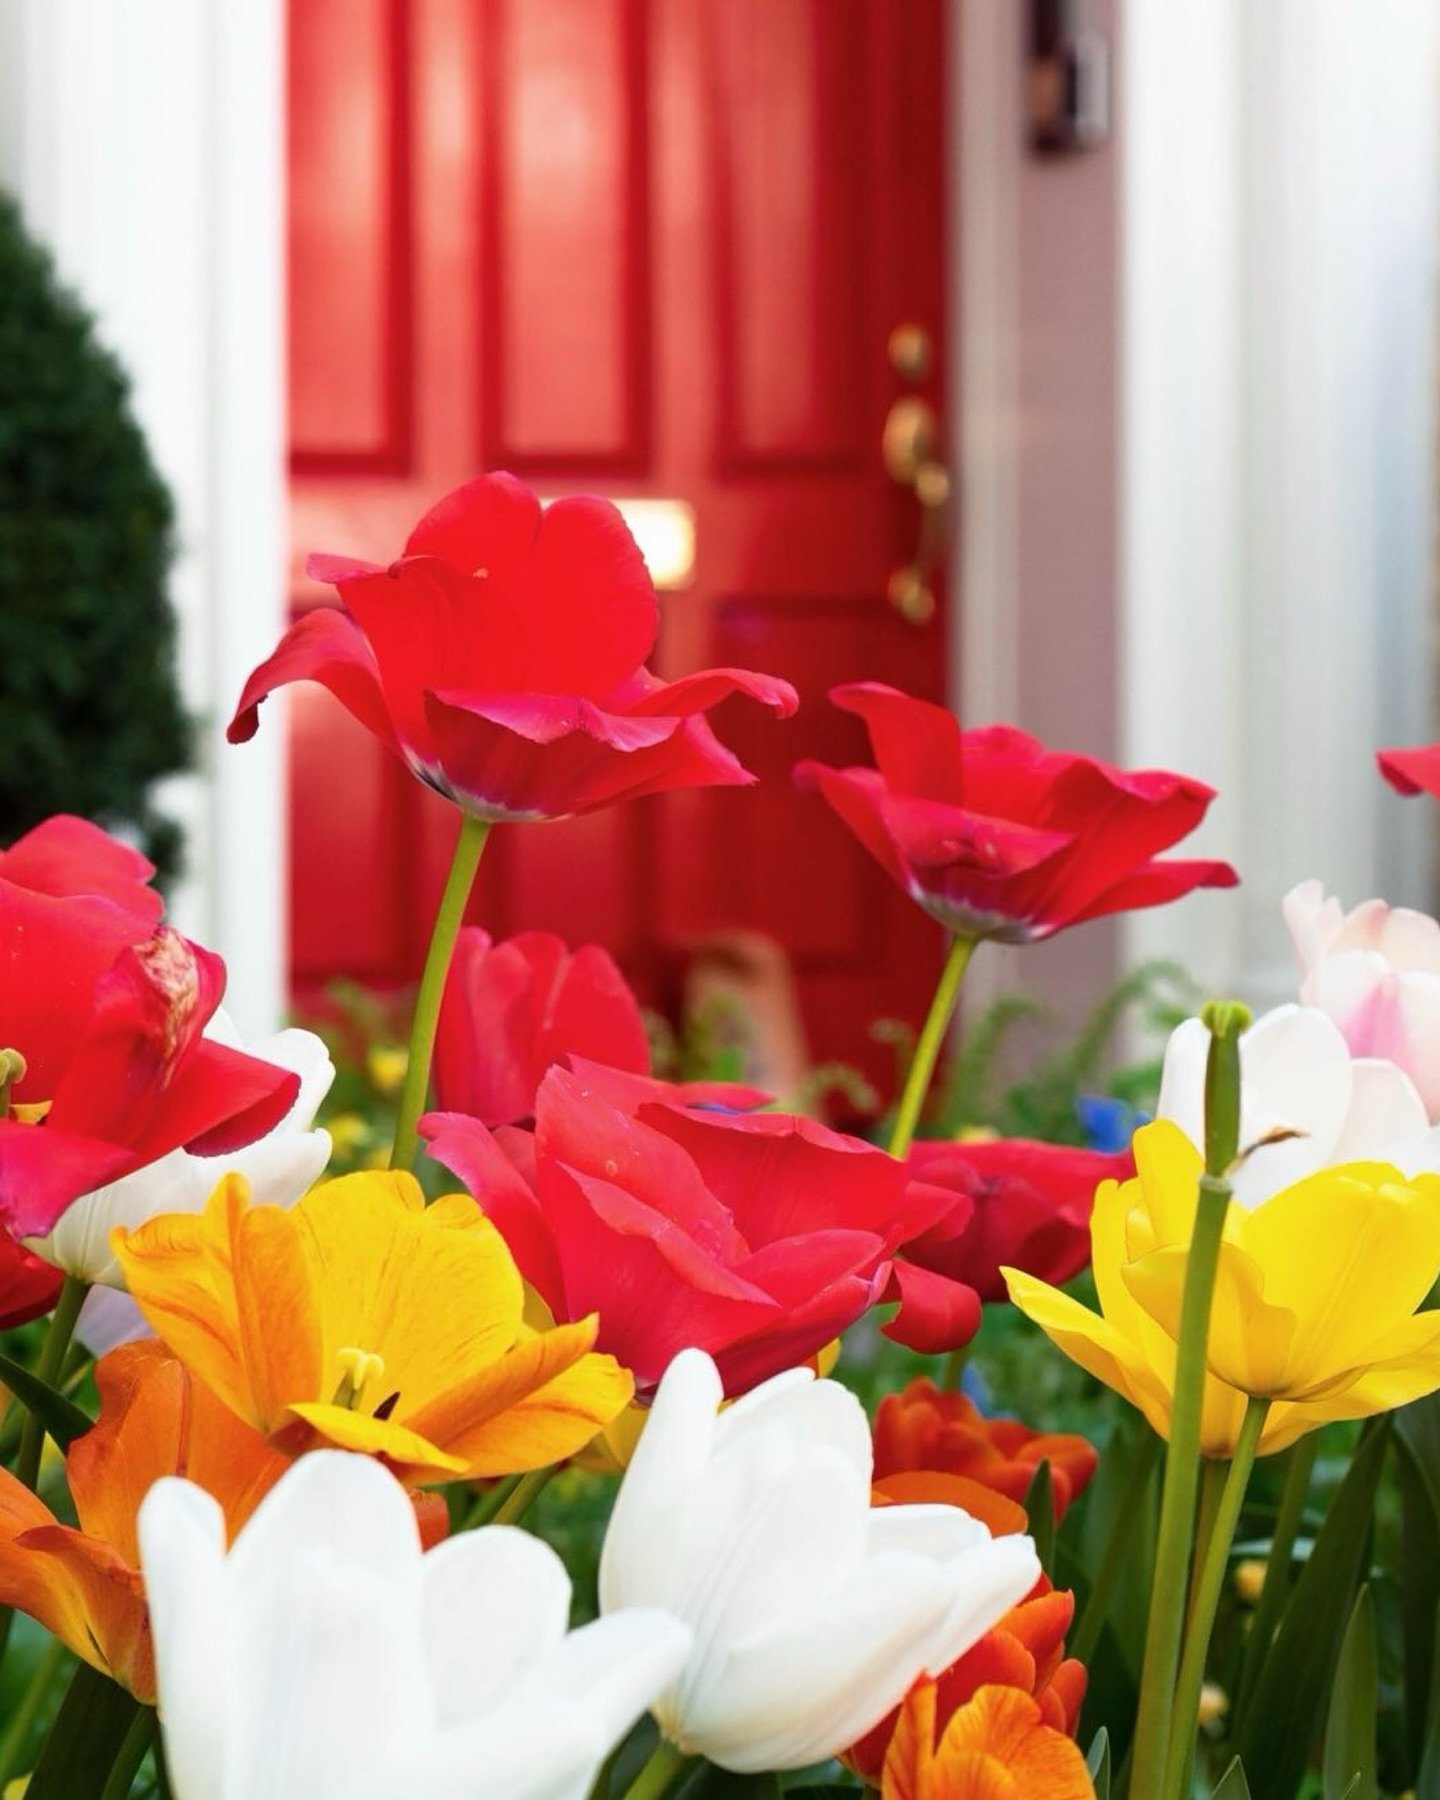 tulip party 🌷✨
.
.
.
#georgetowndc #tulipseason #pursuepretty #petitejoys #flowerstagram #ihavethisthingwithdoors